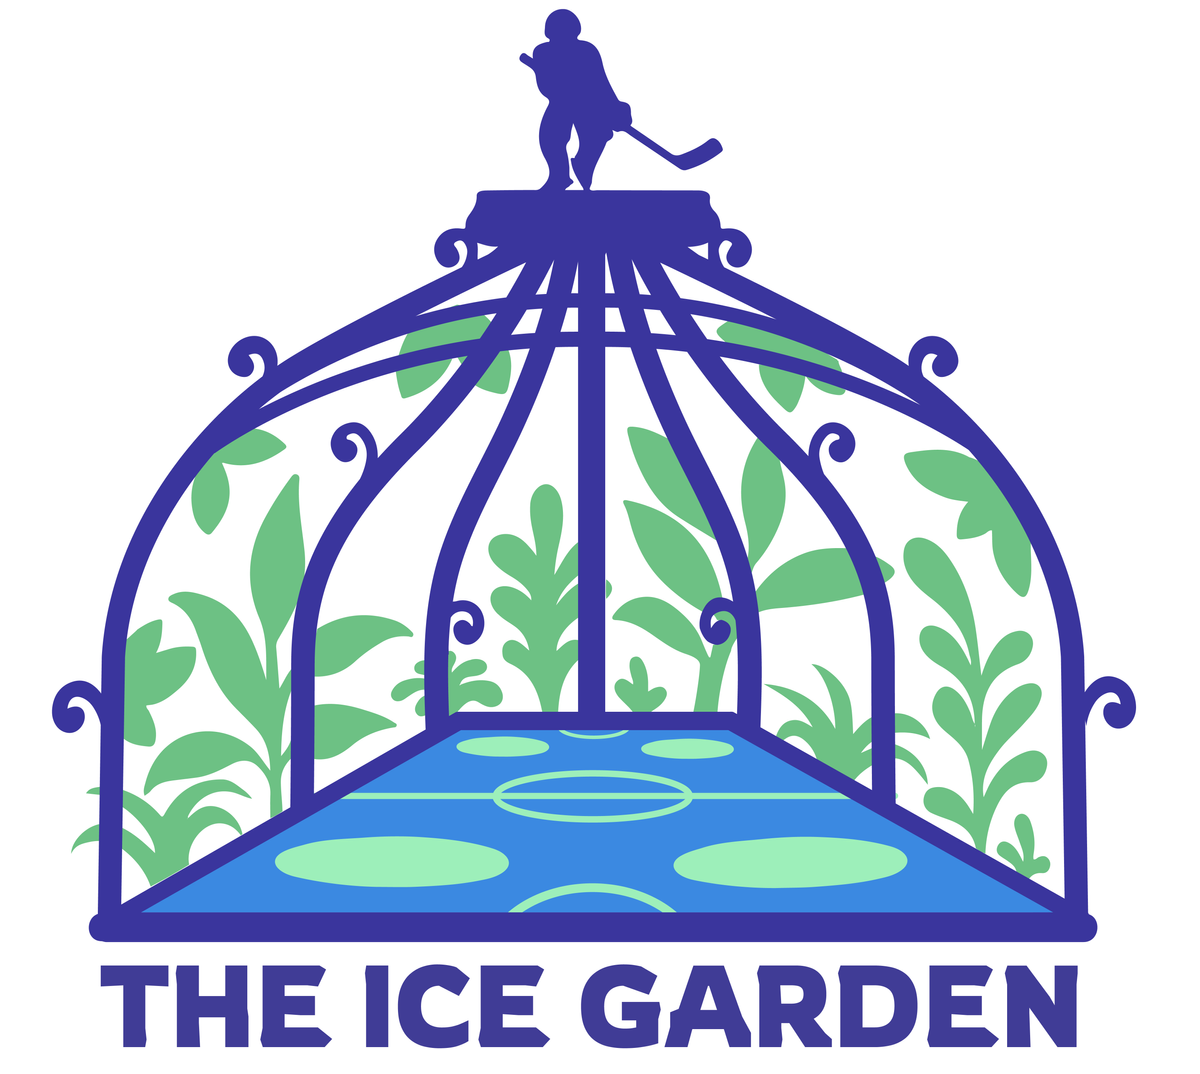 The Ice Garden’s New Look